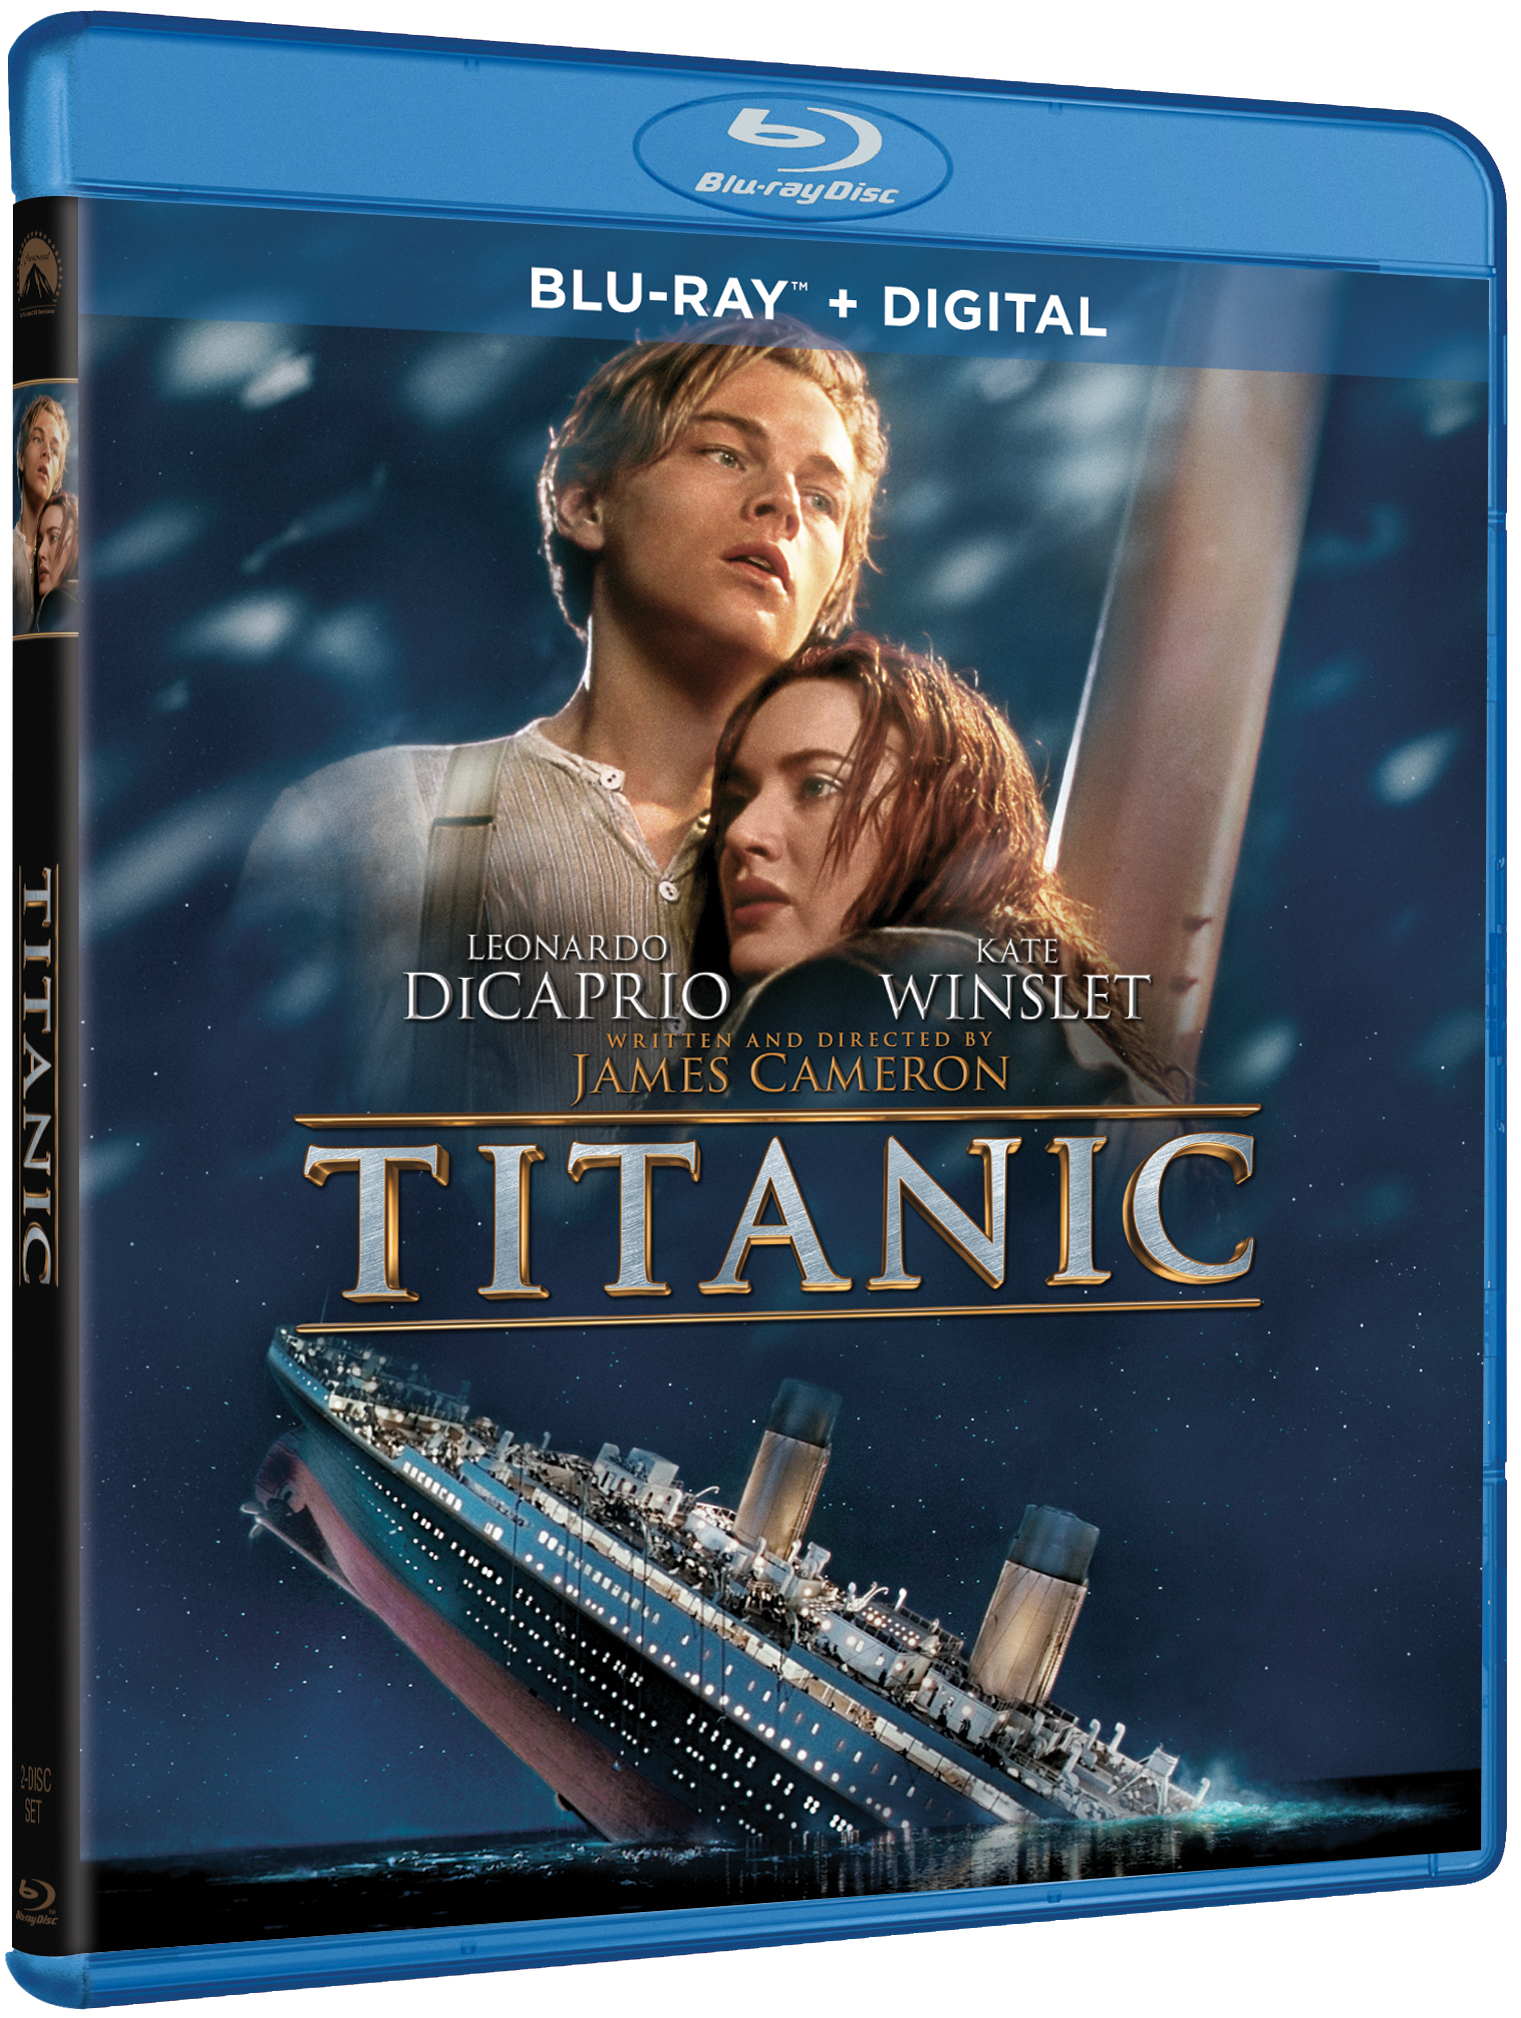 Titanic [Includes Digital Copy] [Blu-ray] [1997] - Best Buy